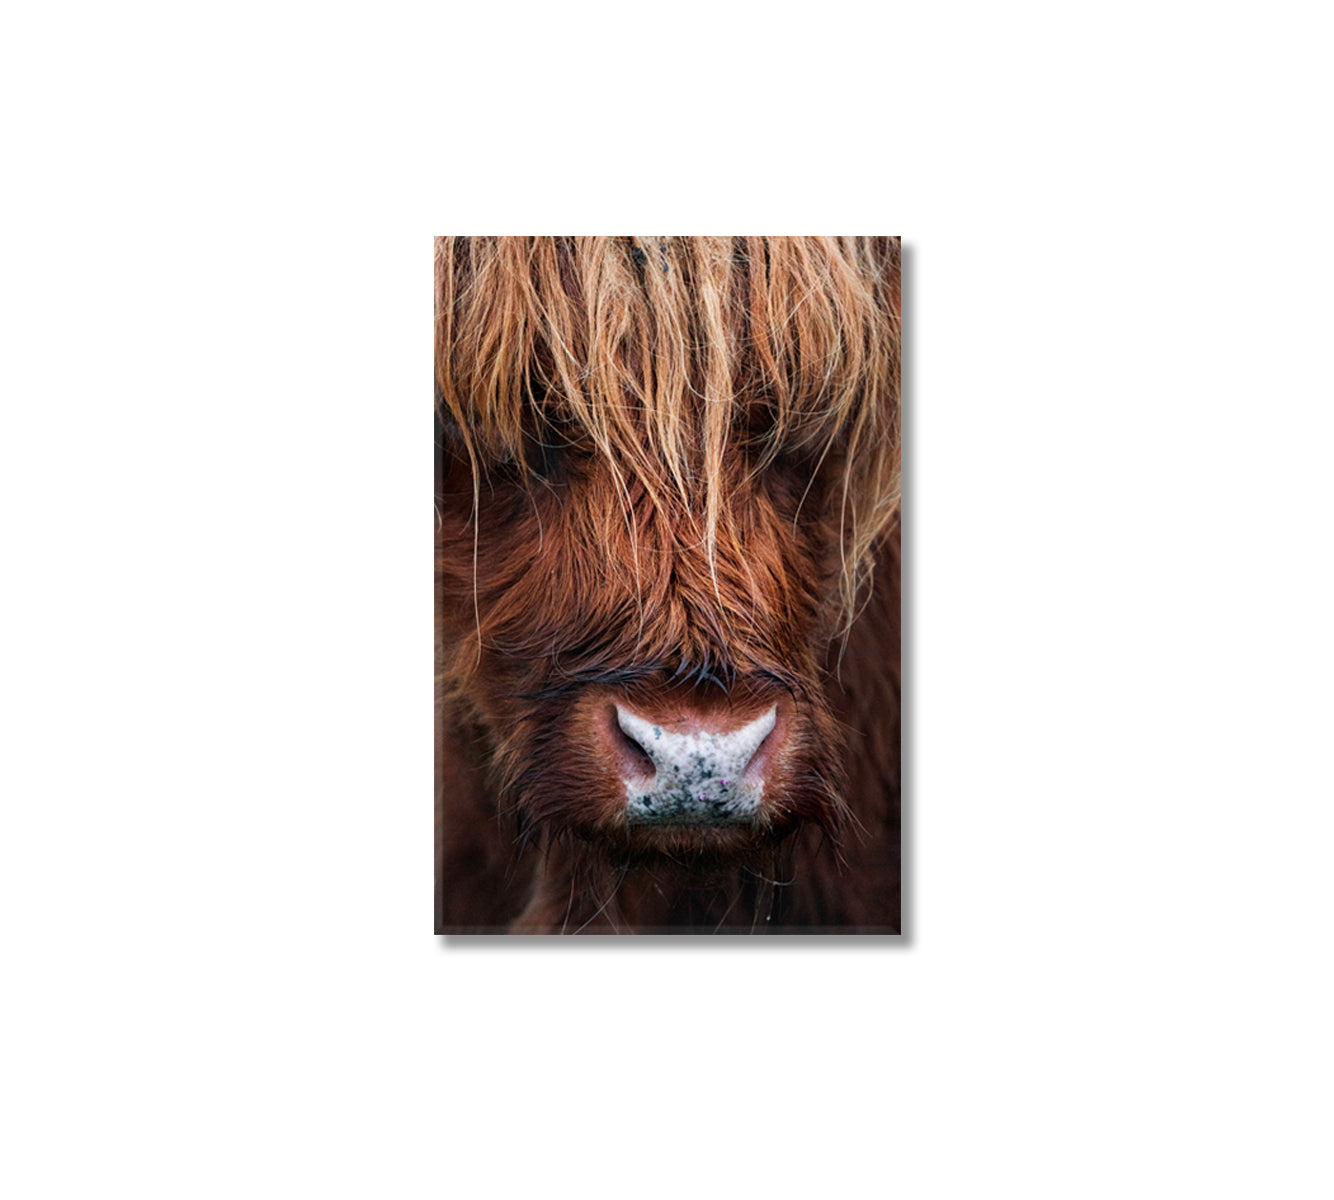 Scottish Highland Cow Canvas Wall Art-Canvas Print-CetArt-1 panel-16x24 inches-CetArt